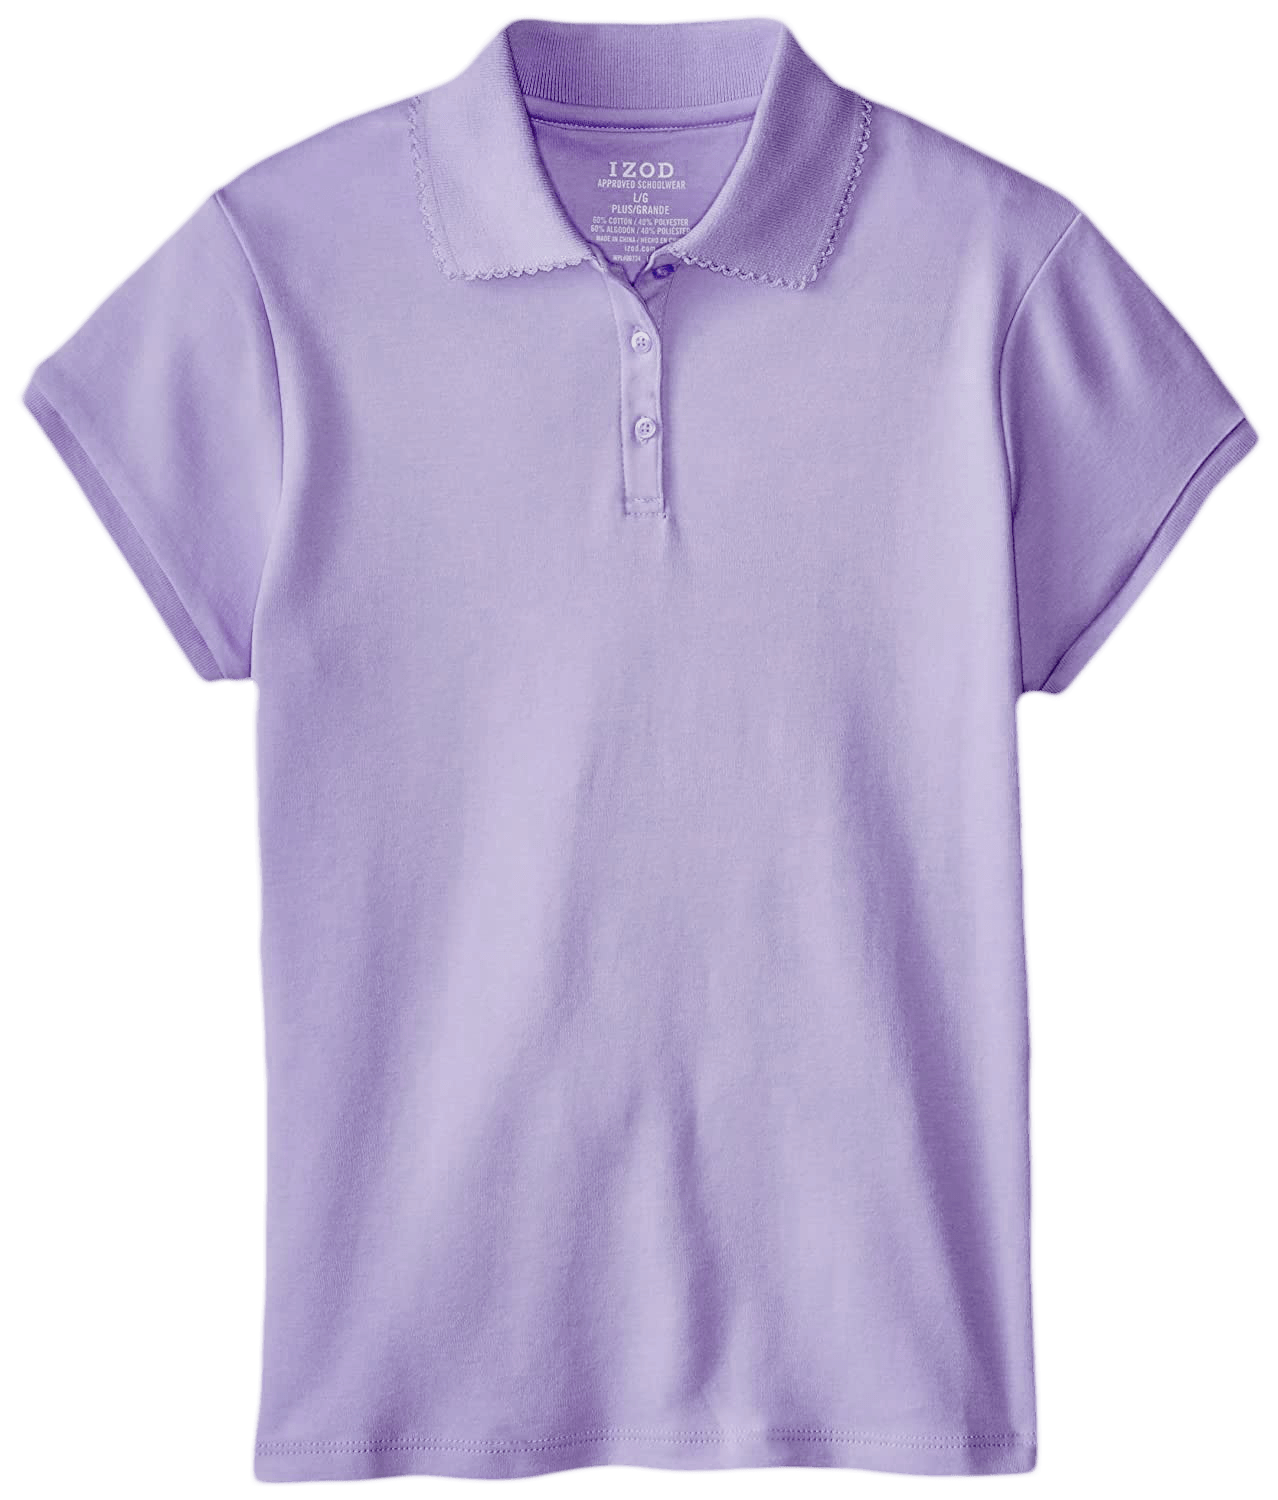 IZOD Apparel 14-16 Years Kids - Short Sleeve Uniform Polo